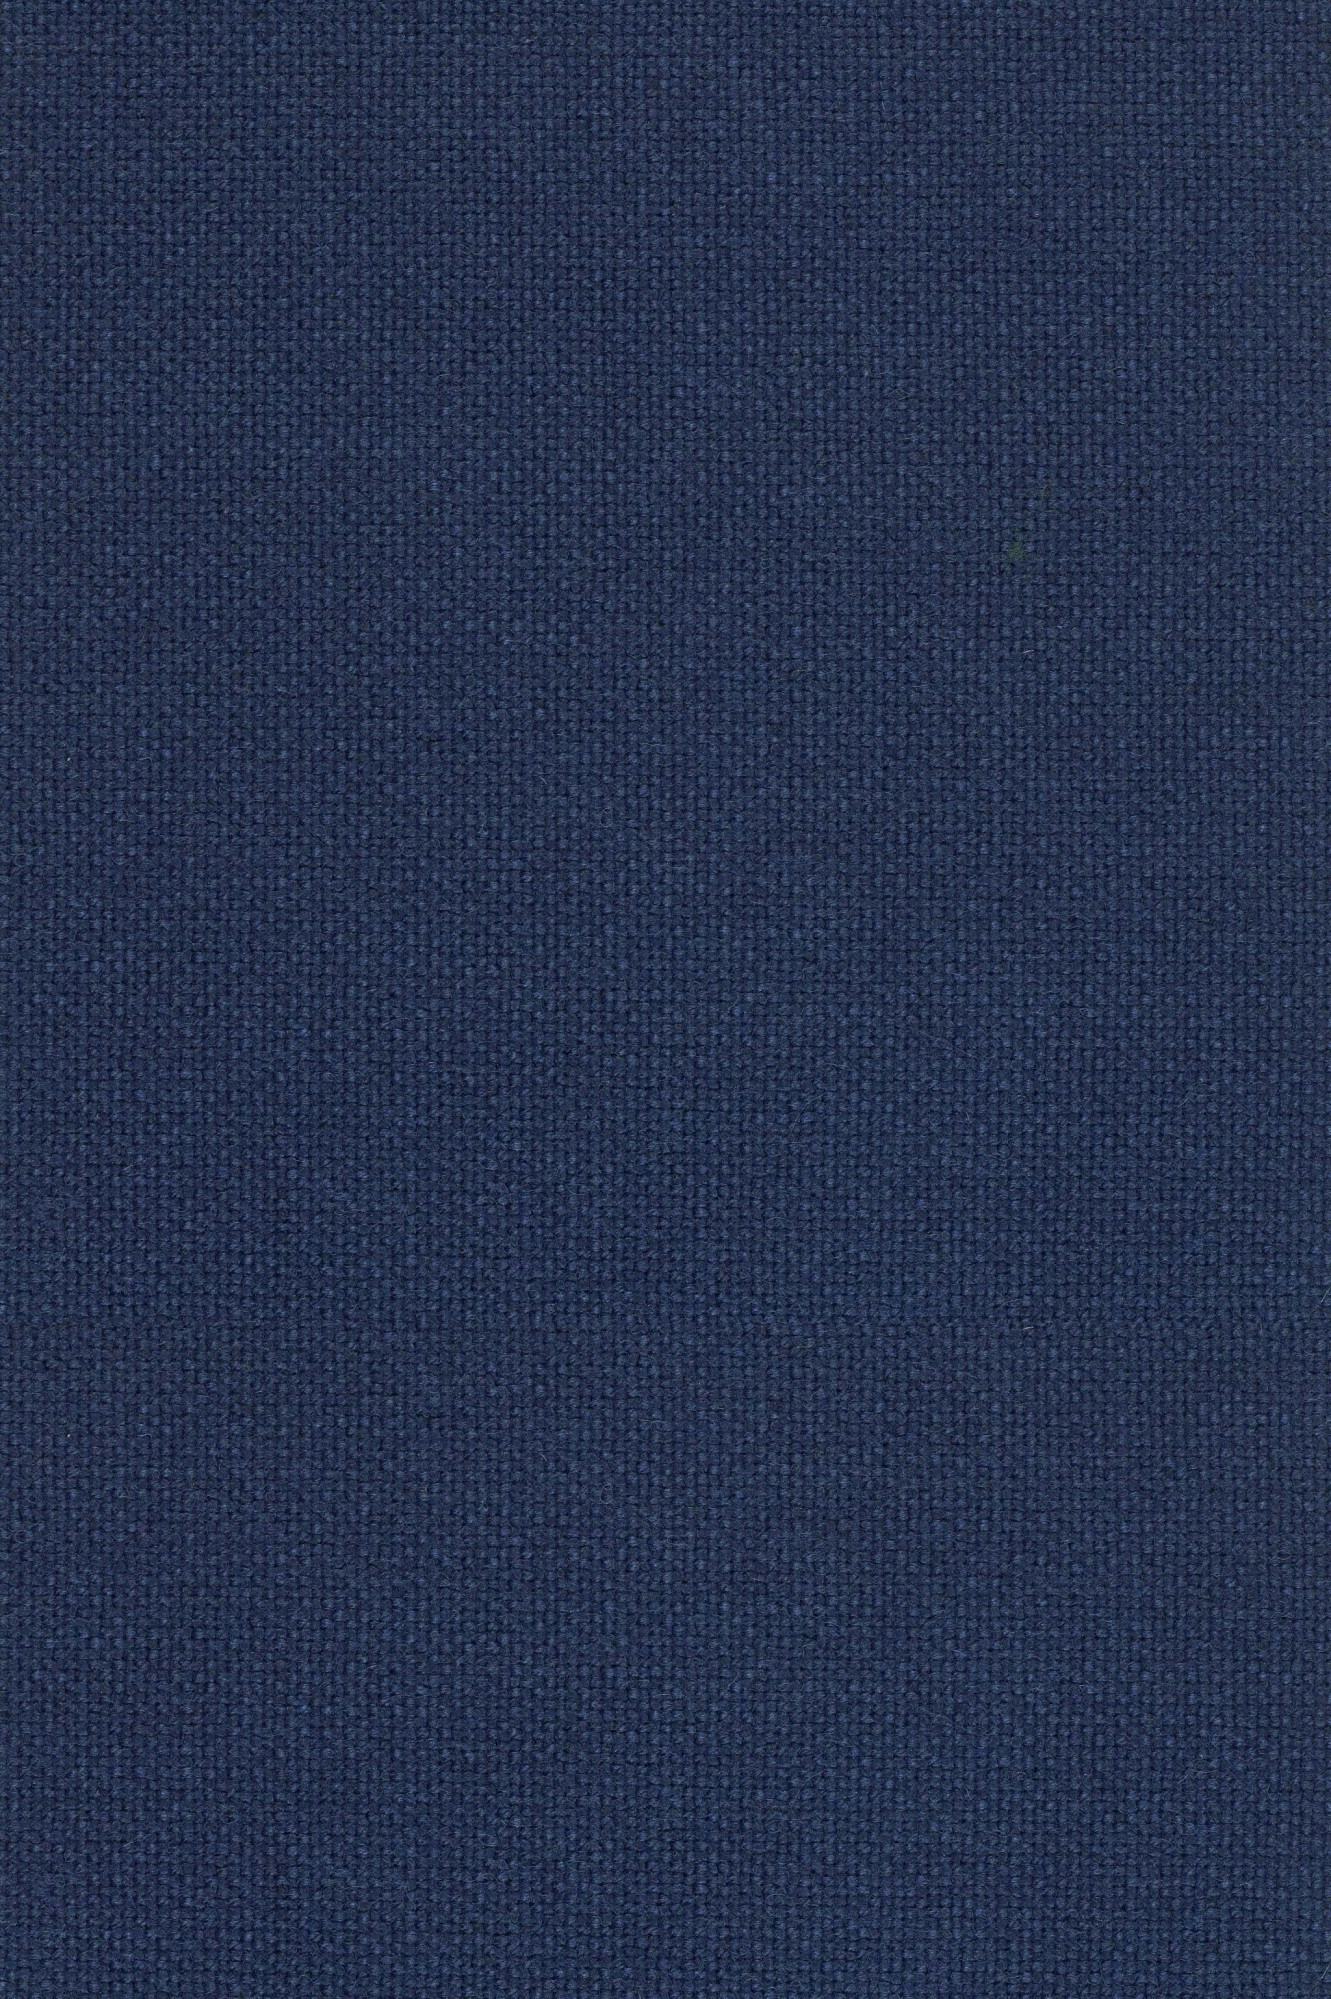 Fabric sample Hallingdal 65 764 blue